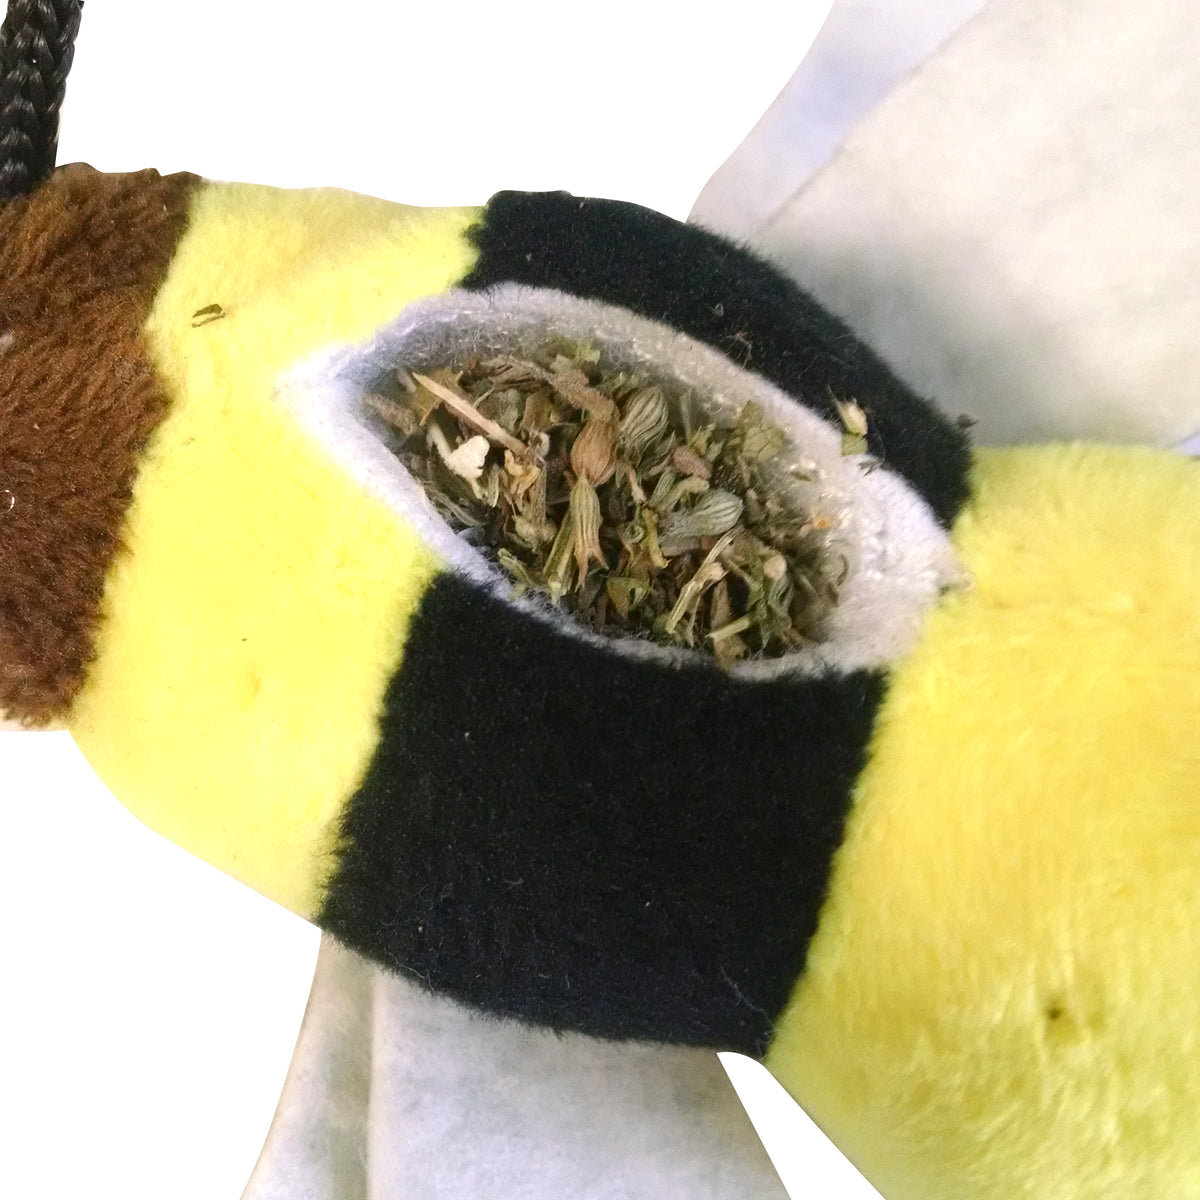 Meowijuana Get Buzzed Bee Refillable Cat Toy